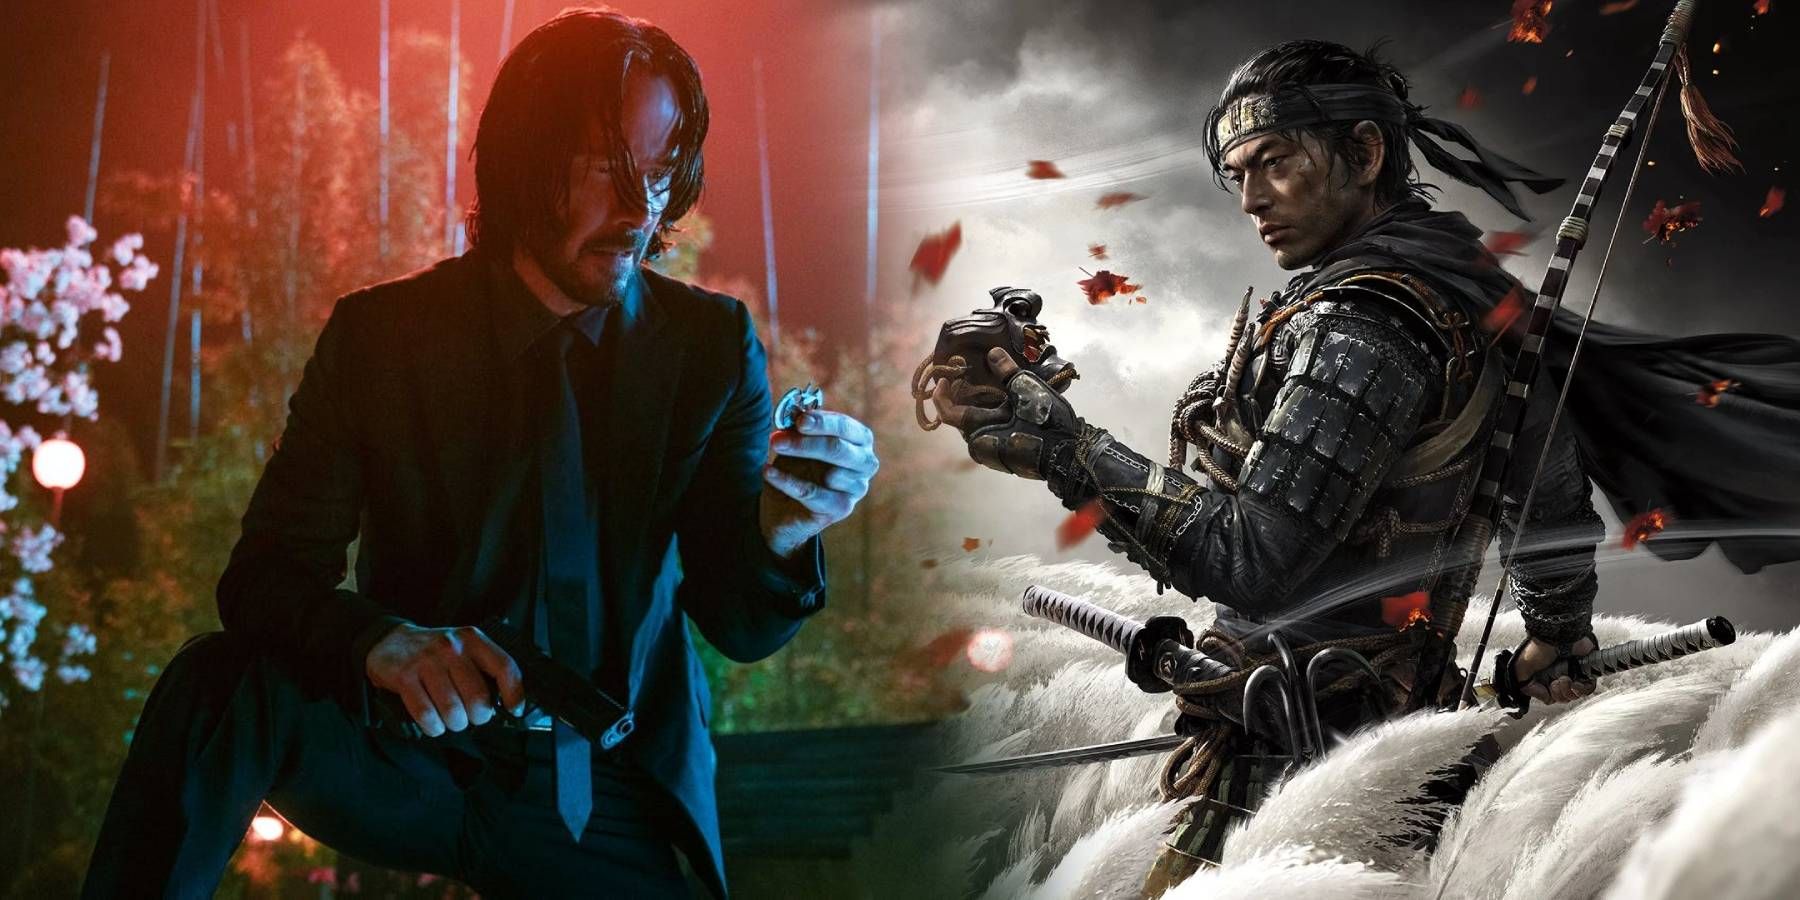 Keanu Reeves as John Wick and Jin Sakai from the video game Ghost of Tsushima